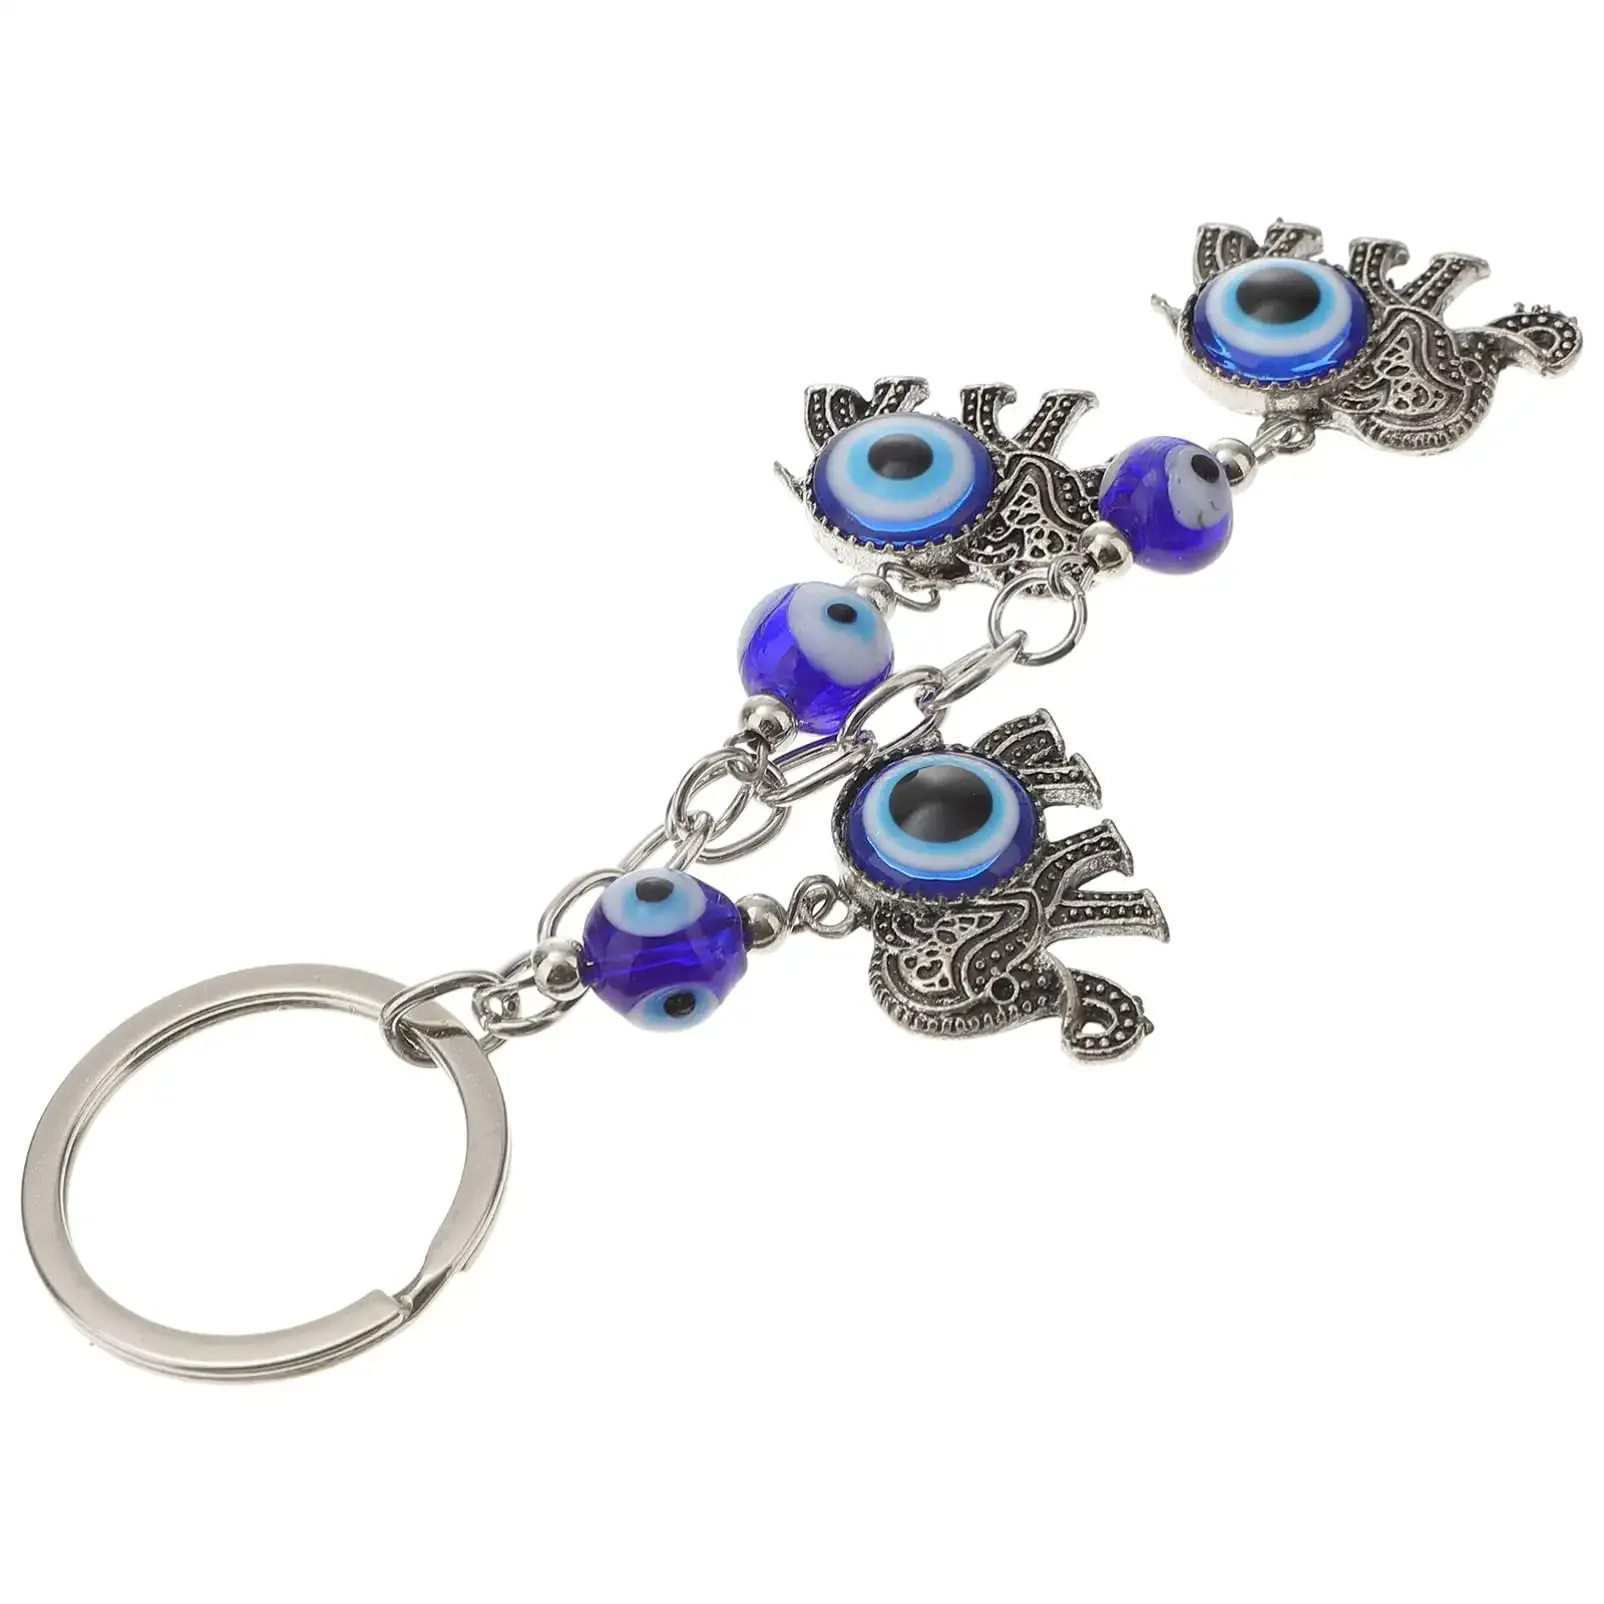 3ml turkish blue evil eye keychain charms bling tassel rhinestone purse accessories cute protection keychains for car keys